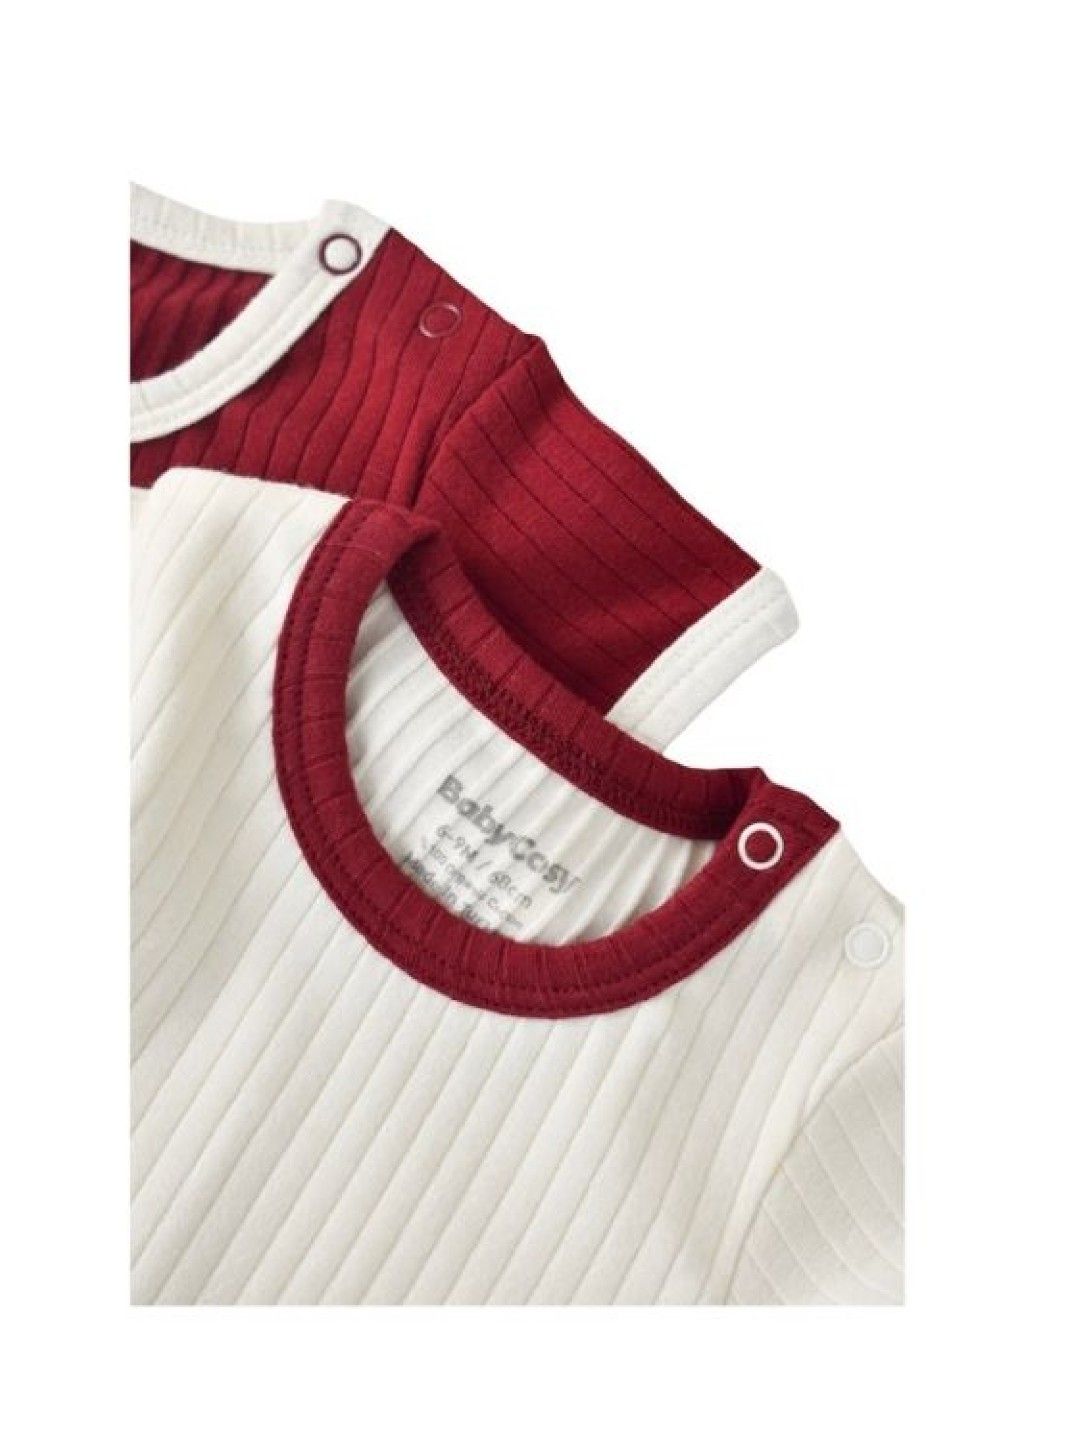 bean fashion Babycosy Organic Shortsleeves Bodysuit Set of 2 (Creamy White & Red- Image 3)